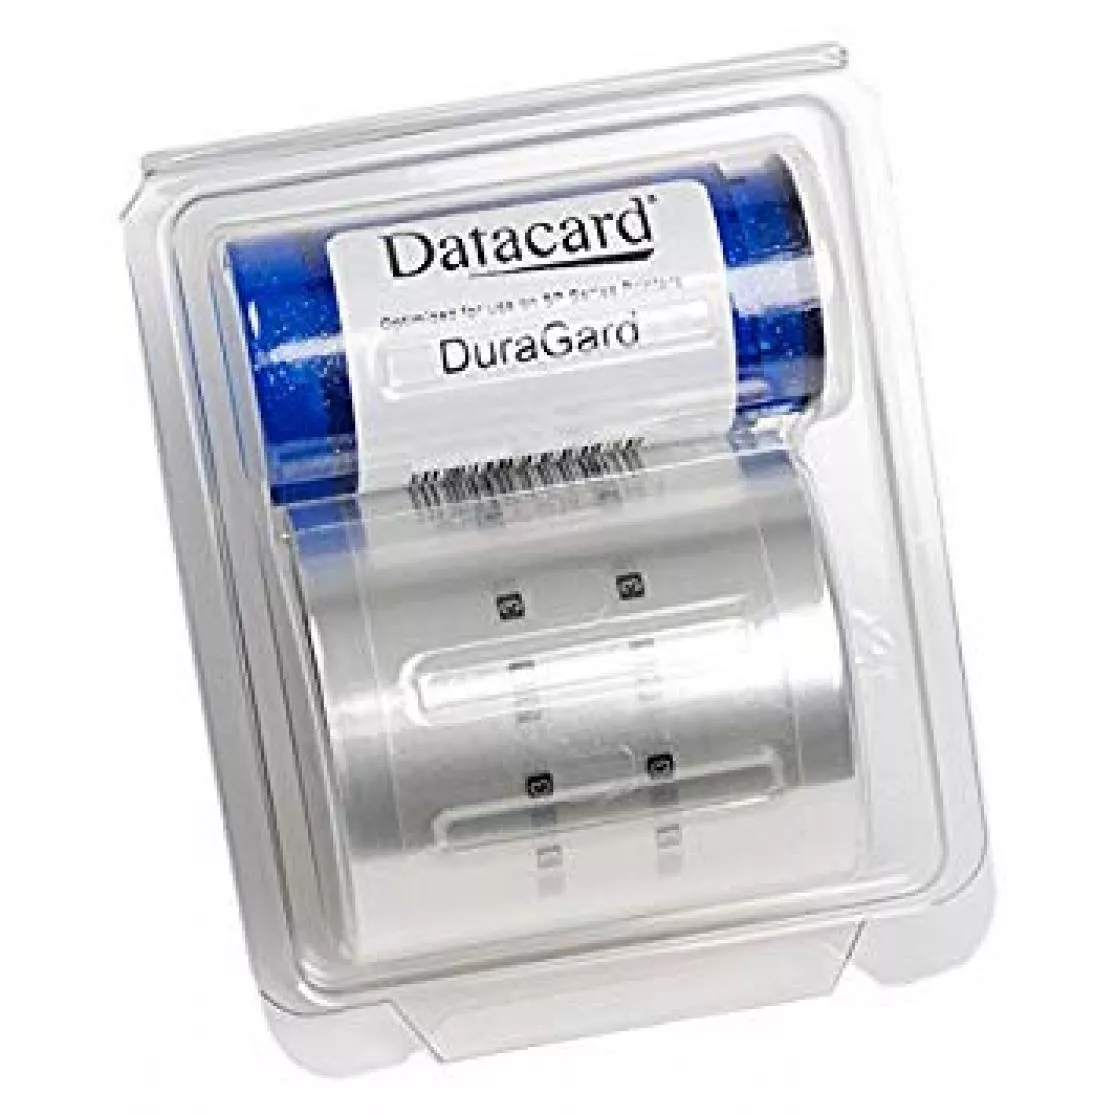 Laminate DuraGard smart card UV protective for card printer datacard SD460